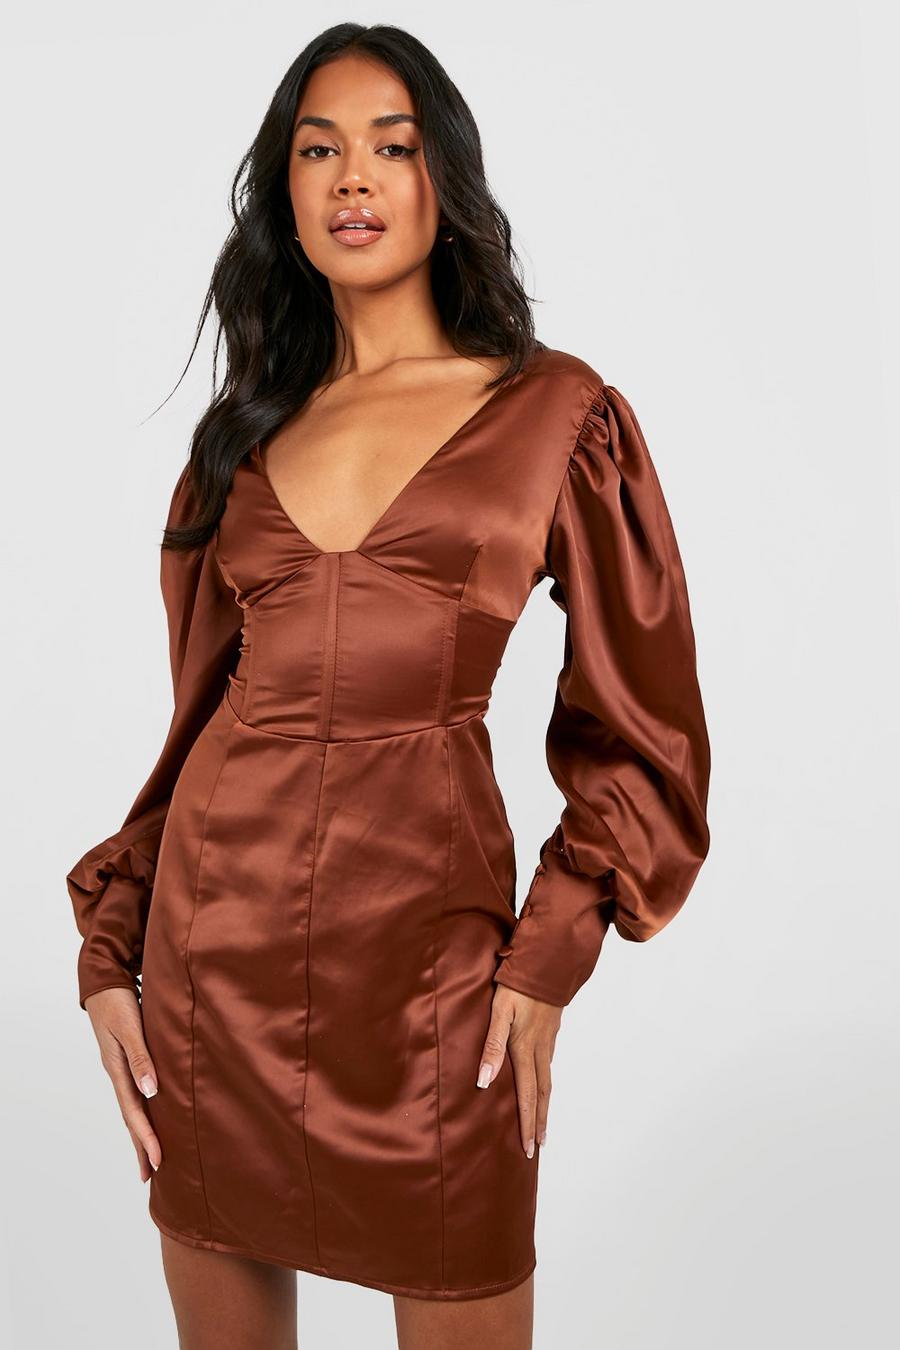 Chocolate brown Volume Sleeve Satin Bodycon Dress